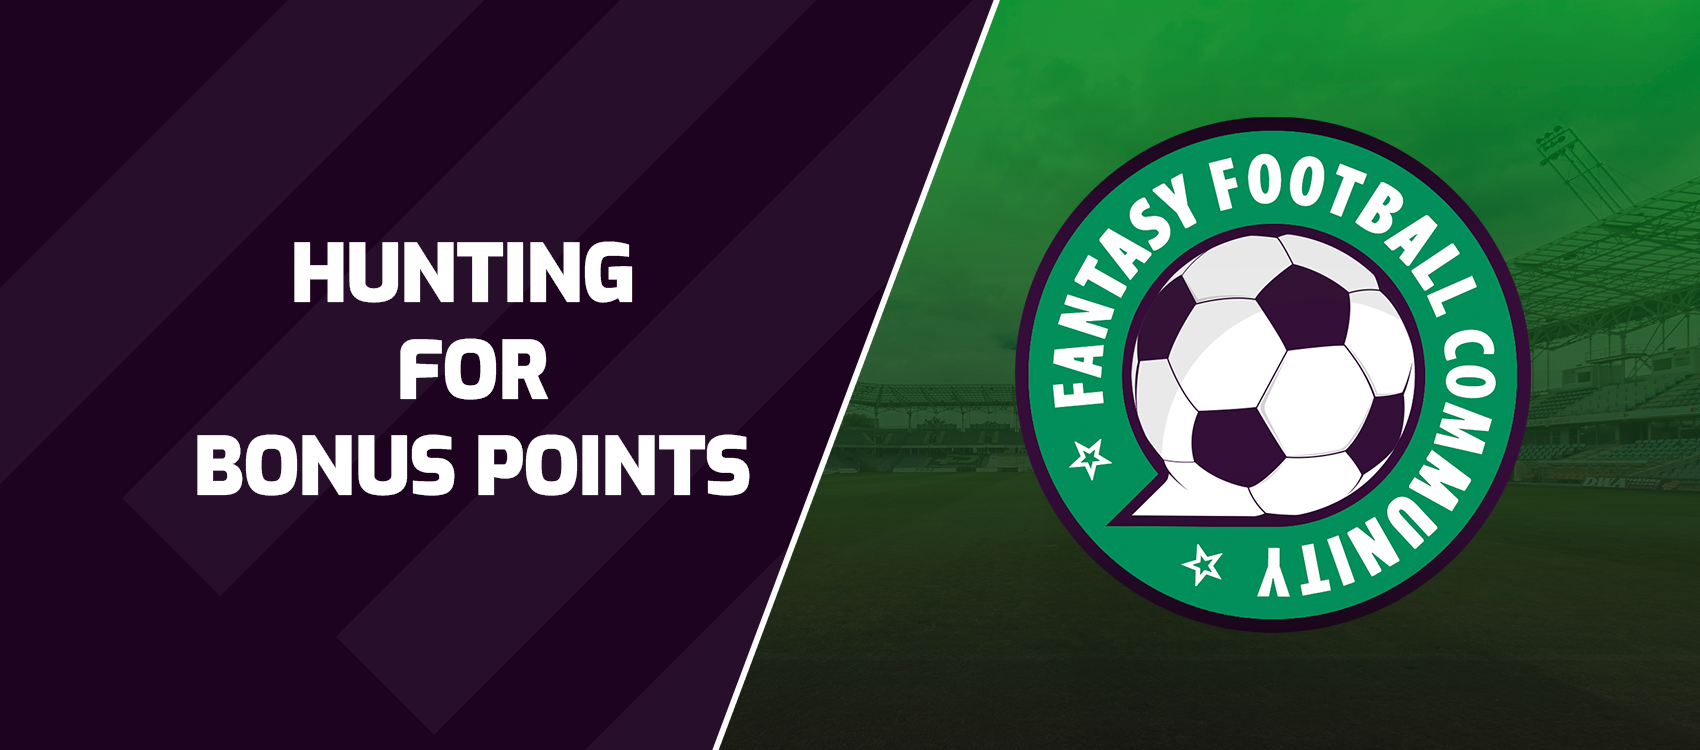 Hunting for Bonus Points - Fantasy Football Community